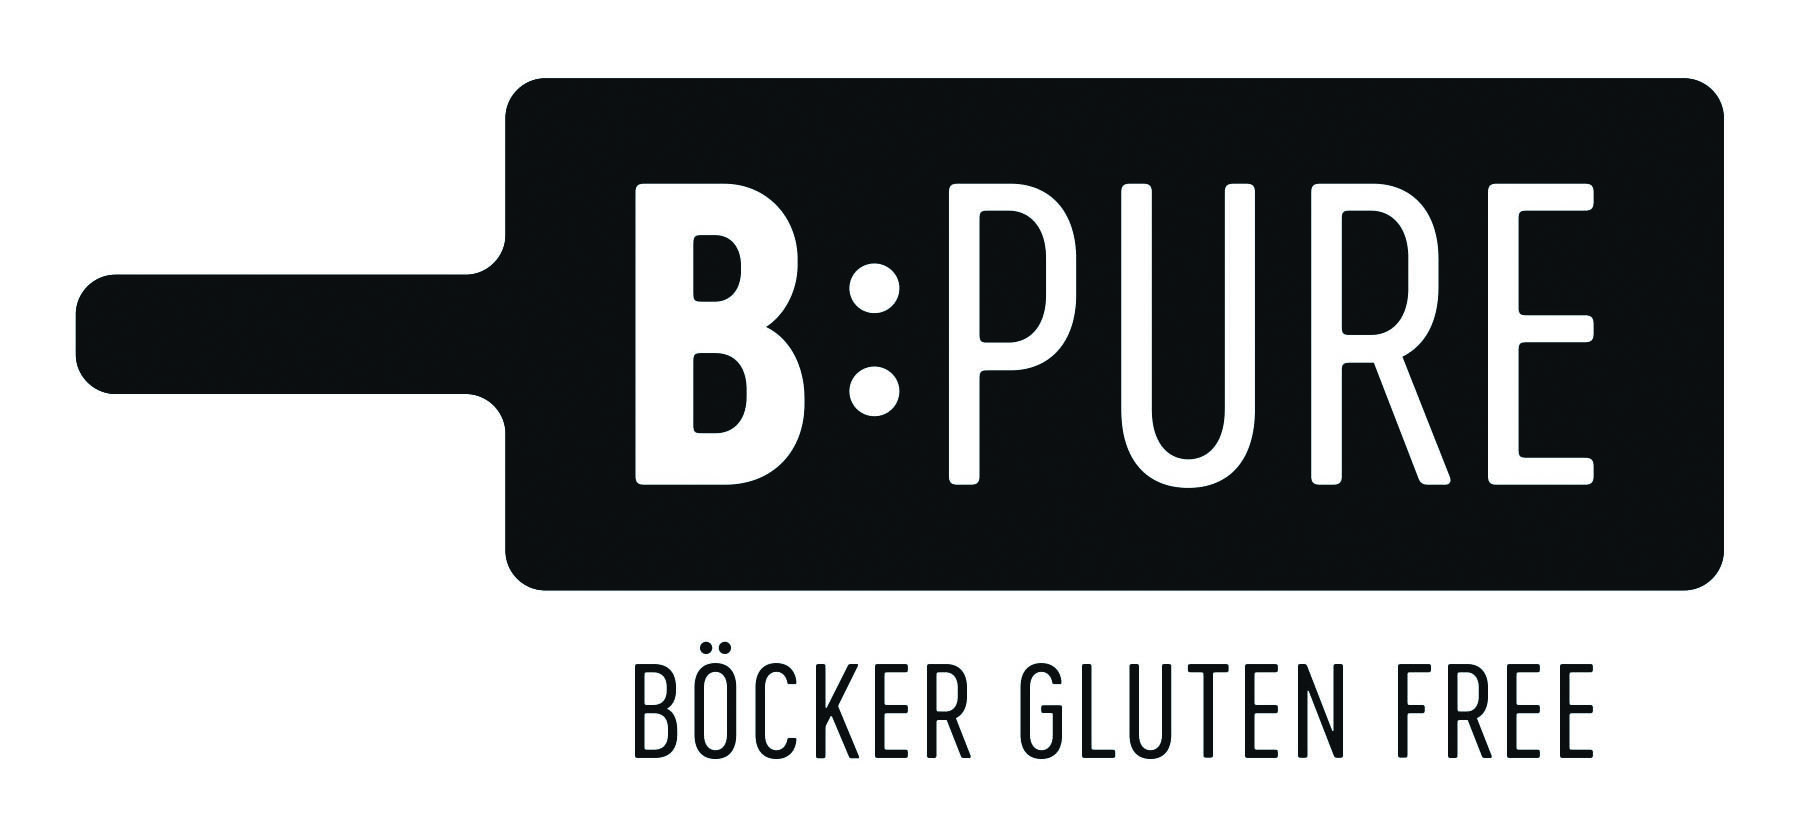 bcker bpure logo